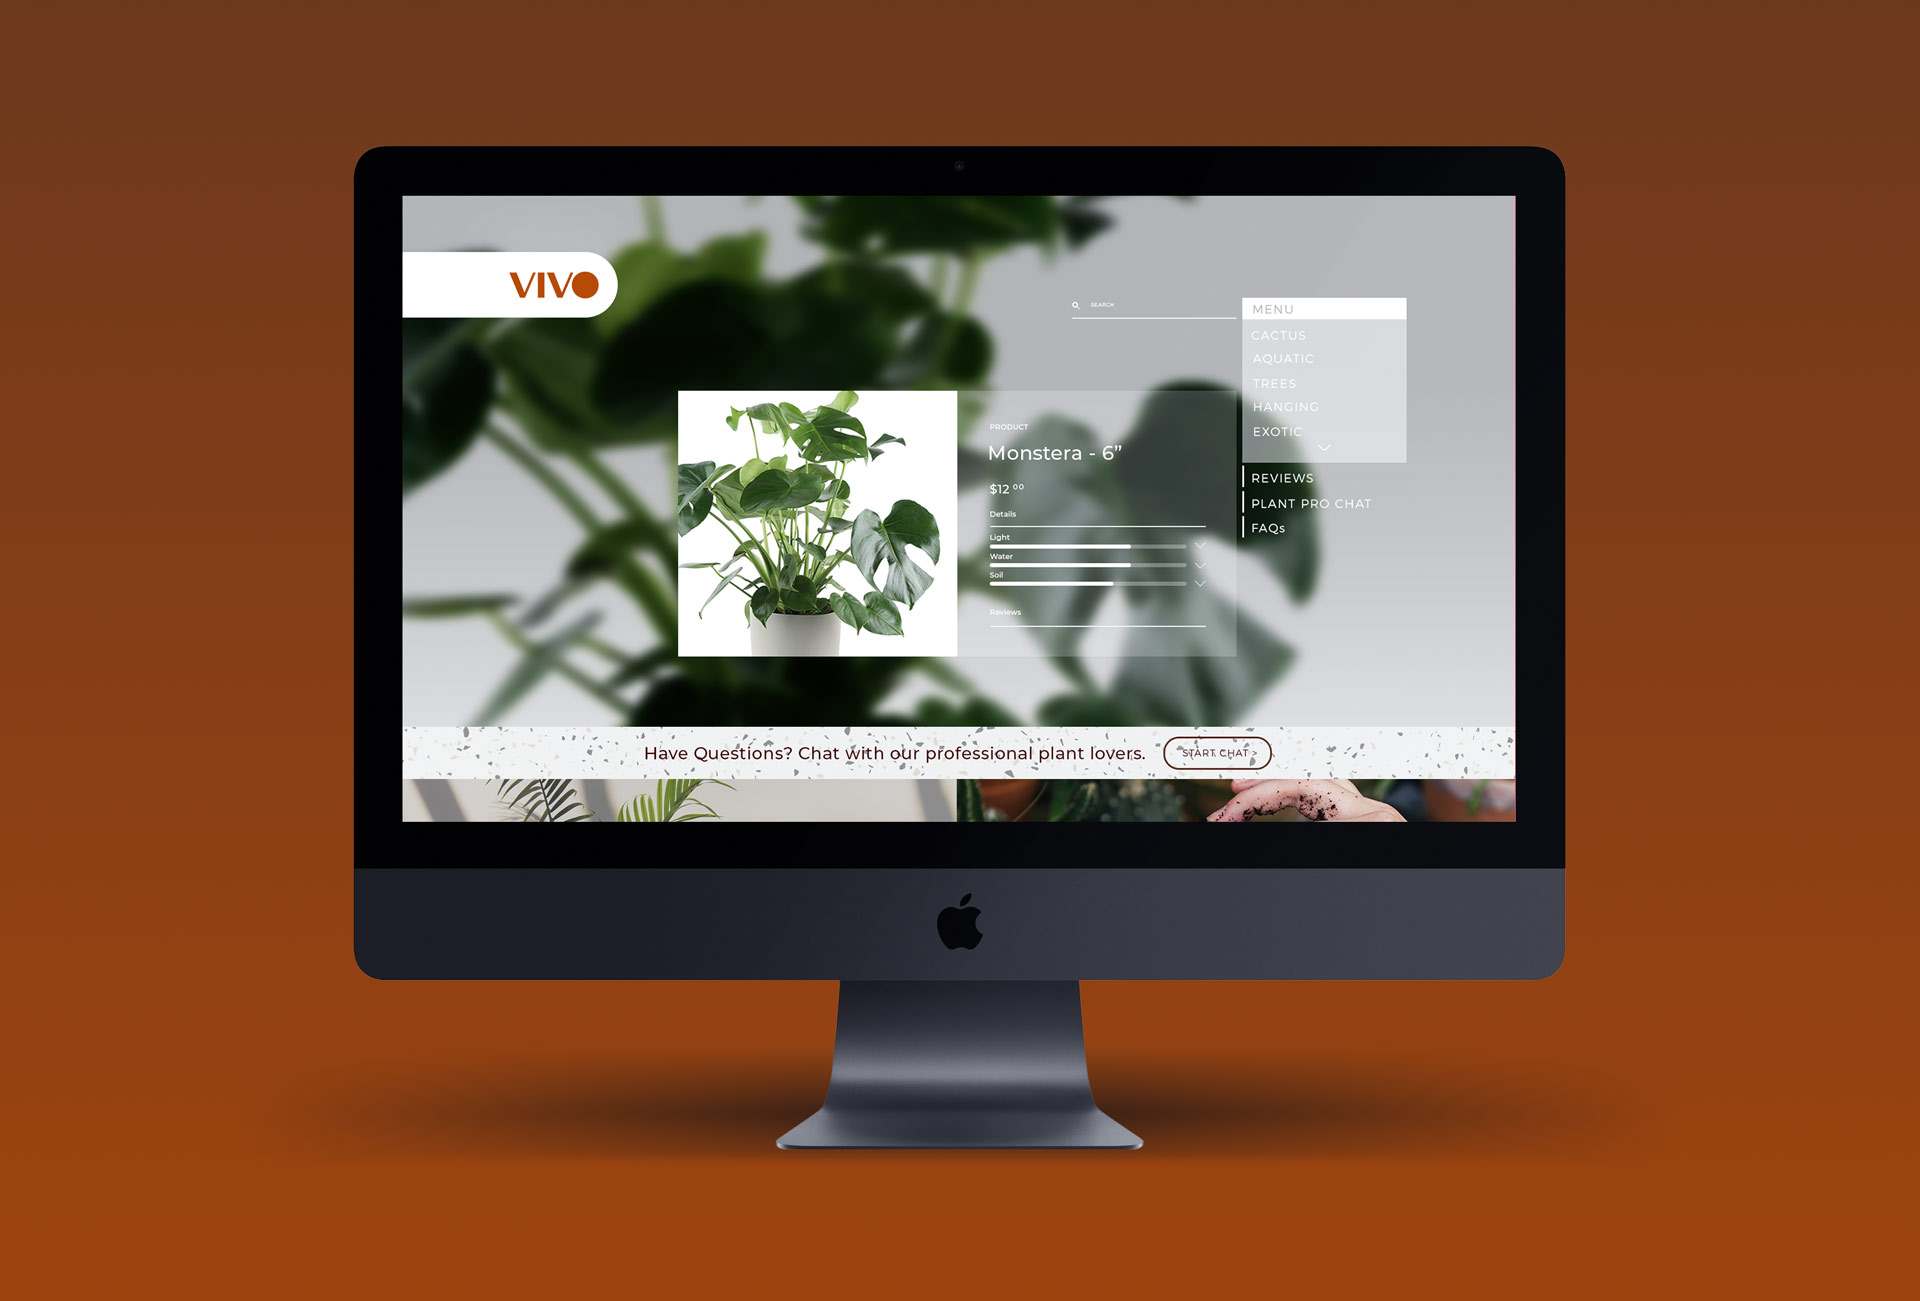 VIVO web product page